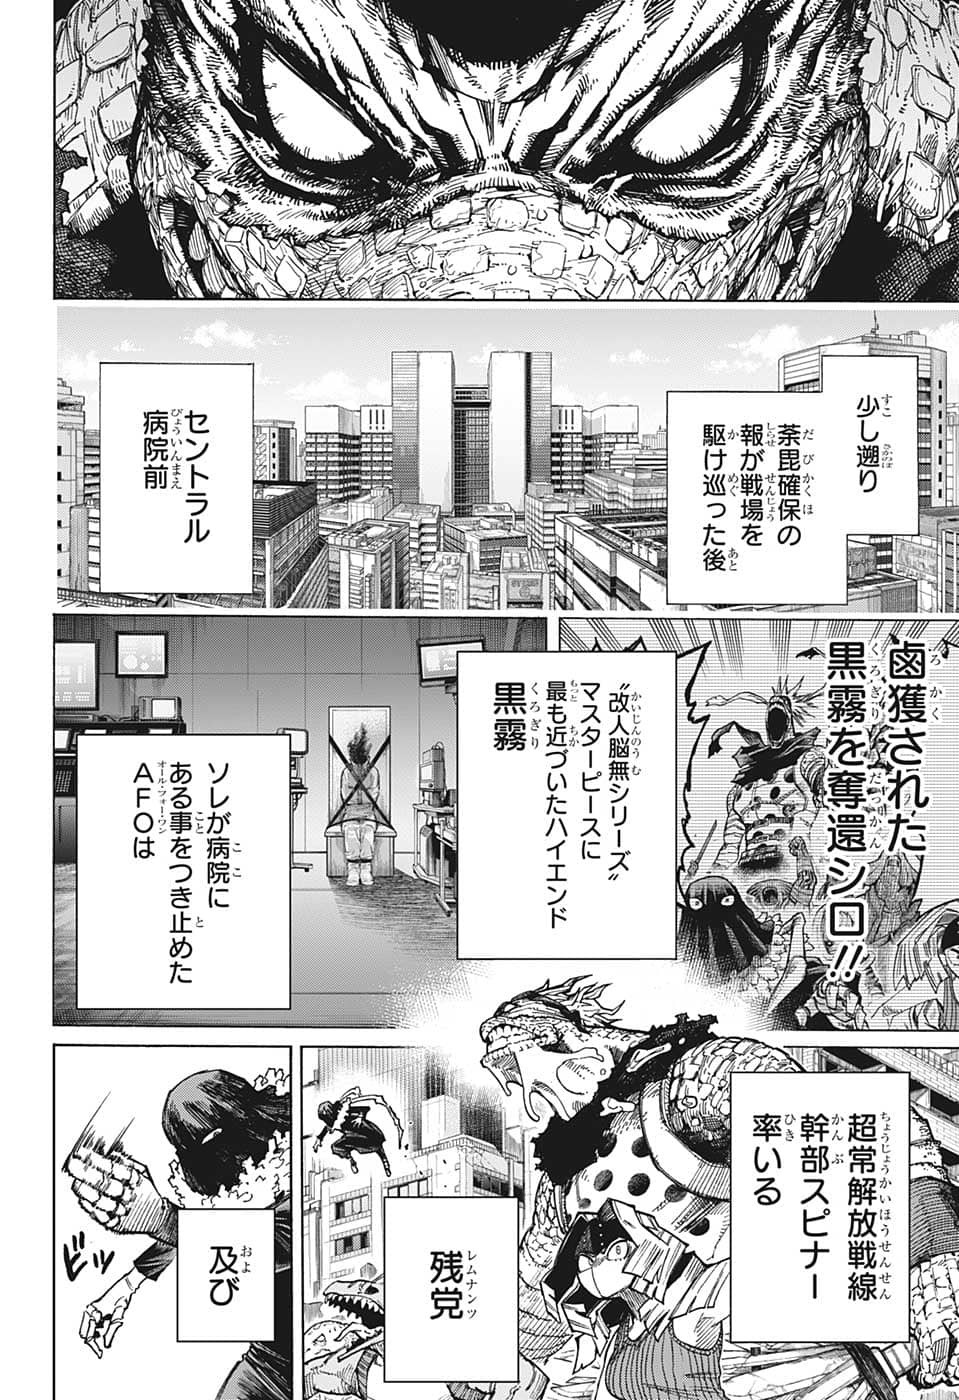 Boku no Hero Academia - Chapter 370 - Page 2